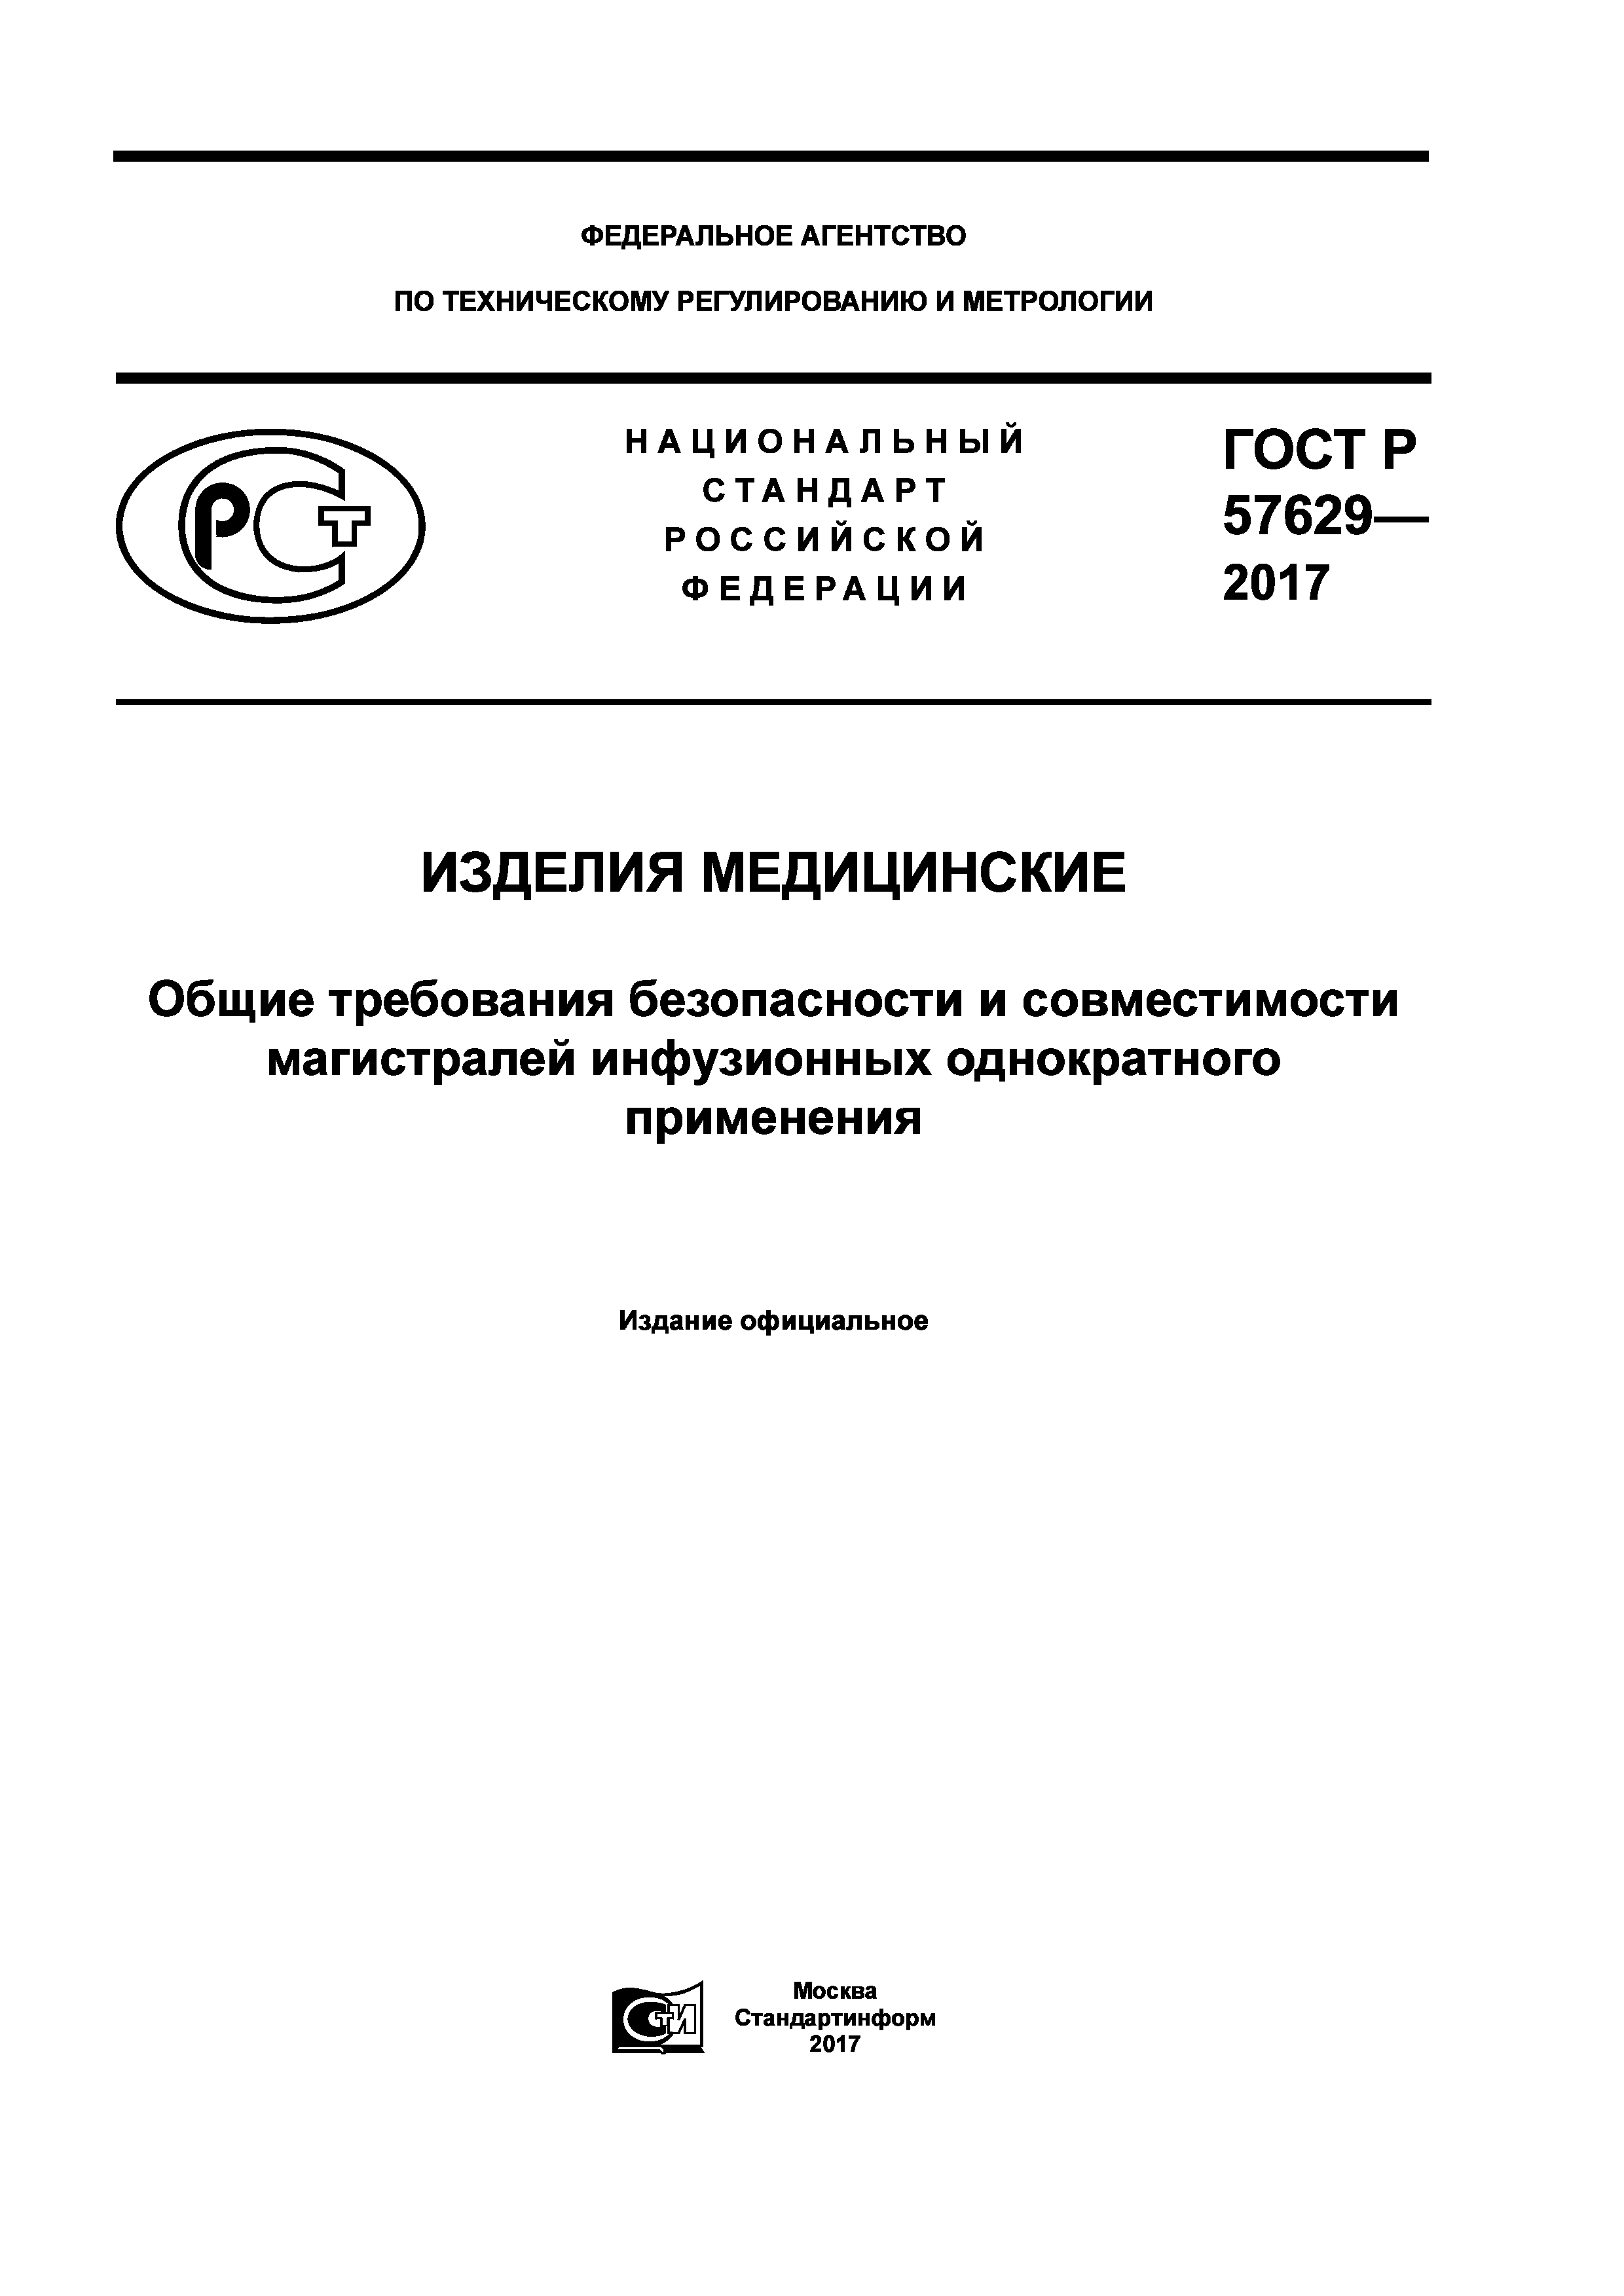 ГОСТ Р 57629-2017